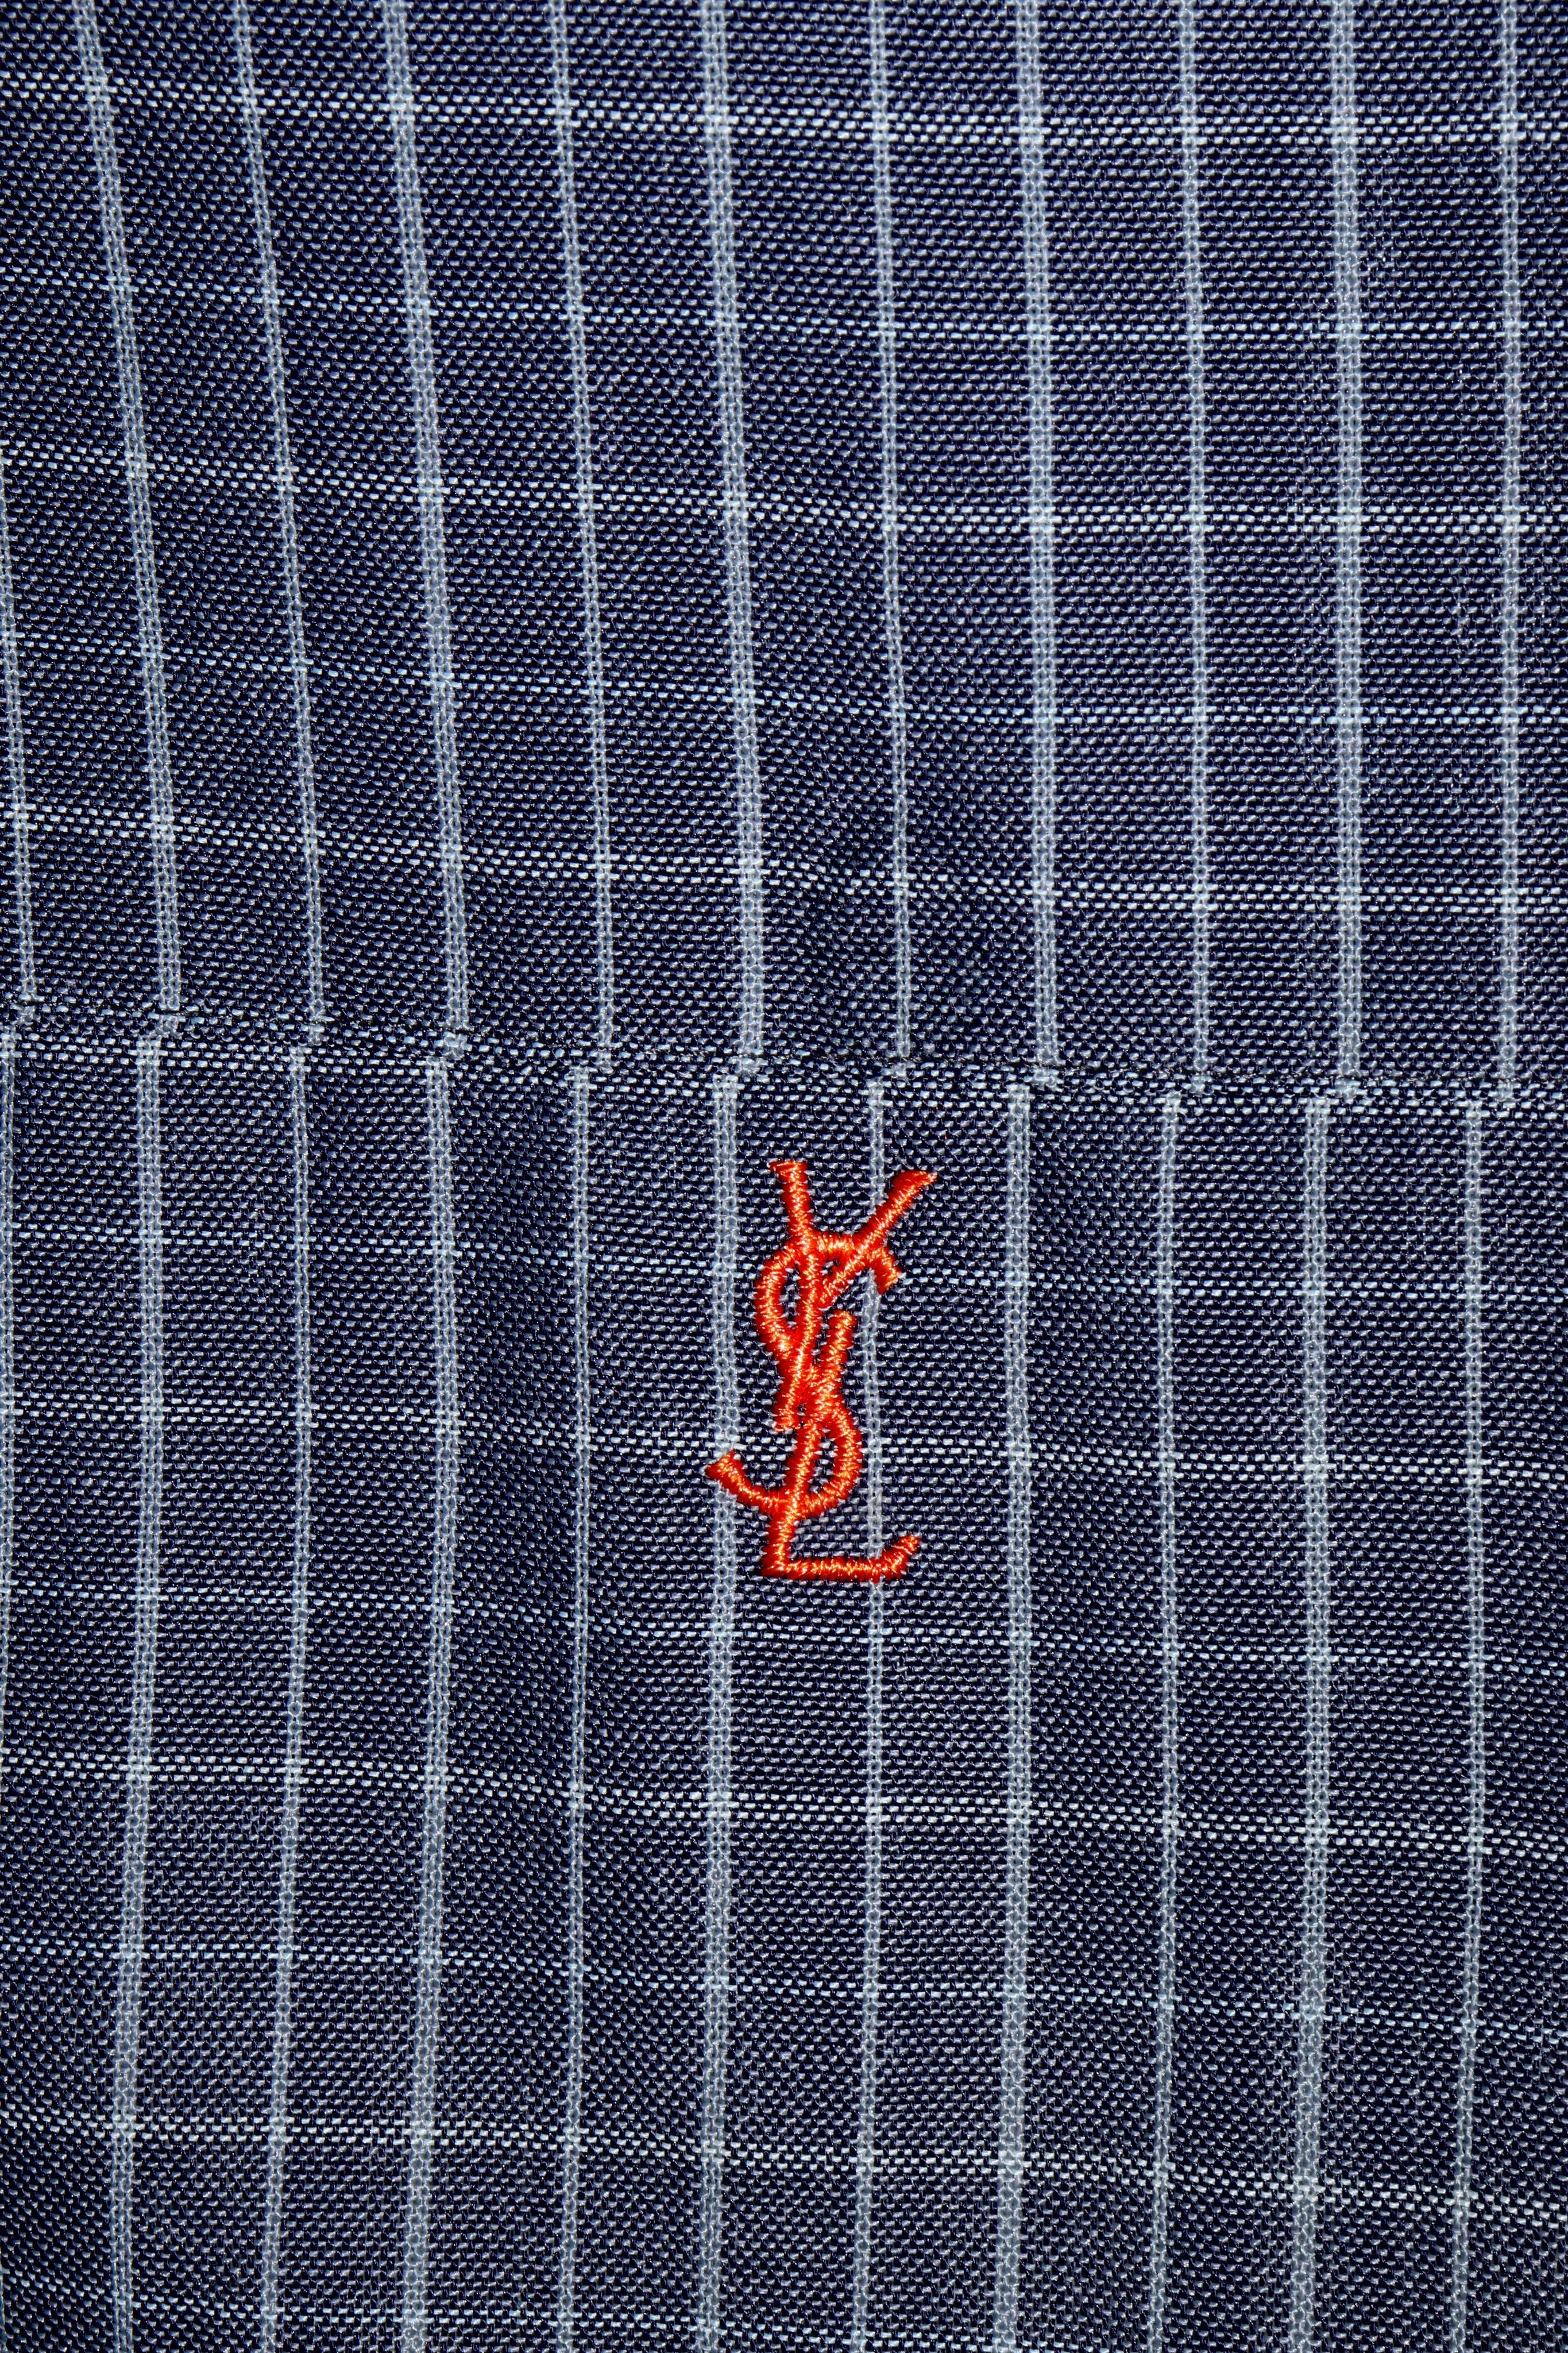 Yves Saint Laurent Logo Jacket (Grey Plaid)